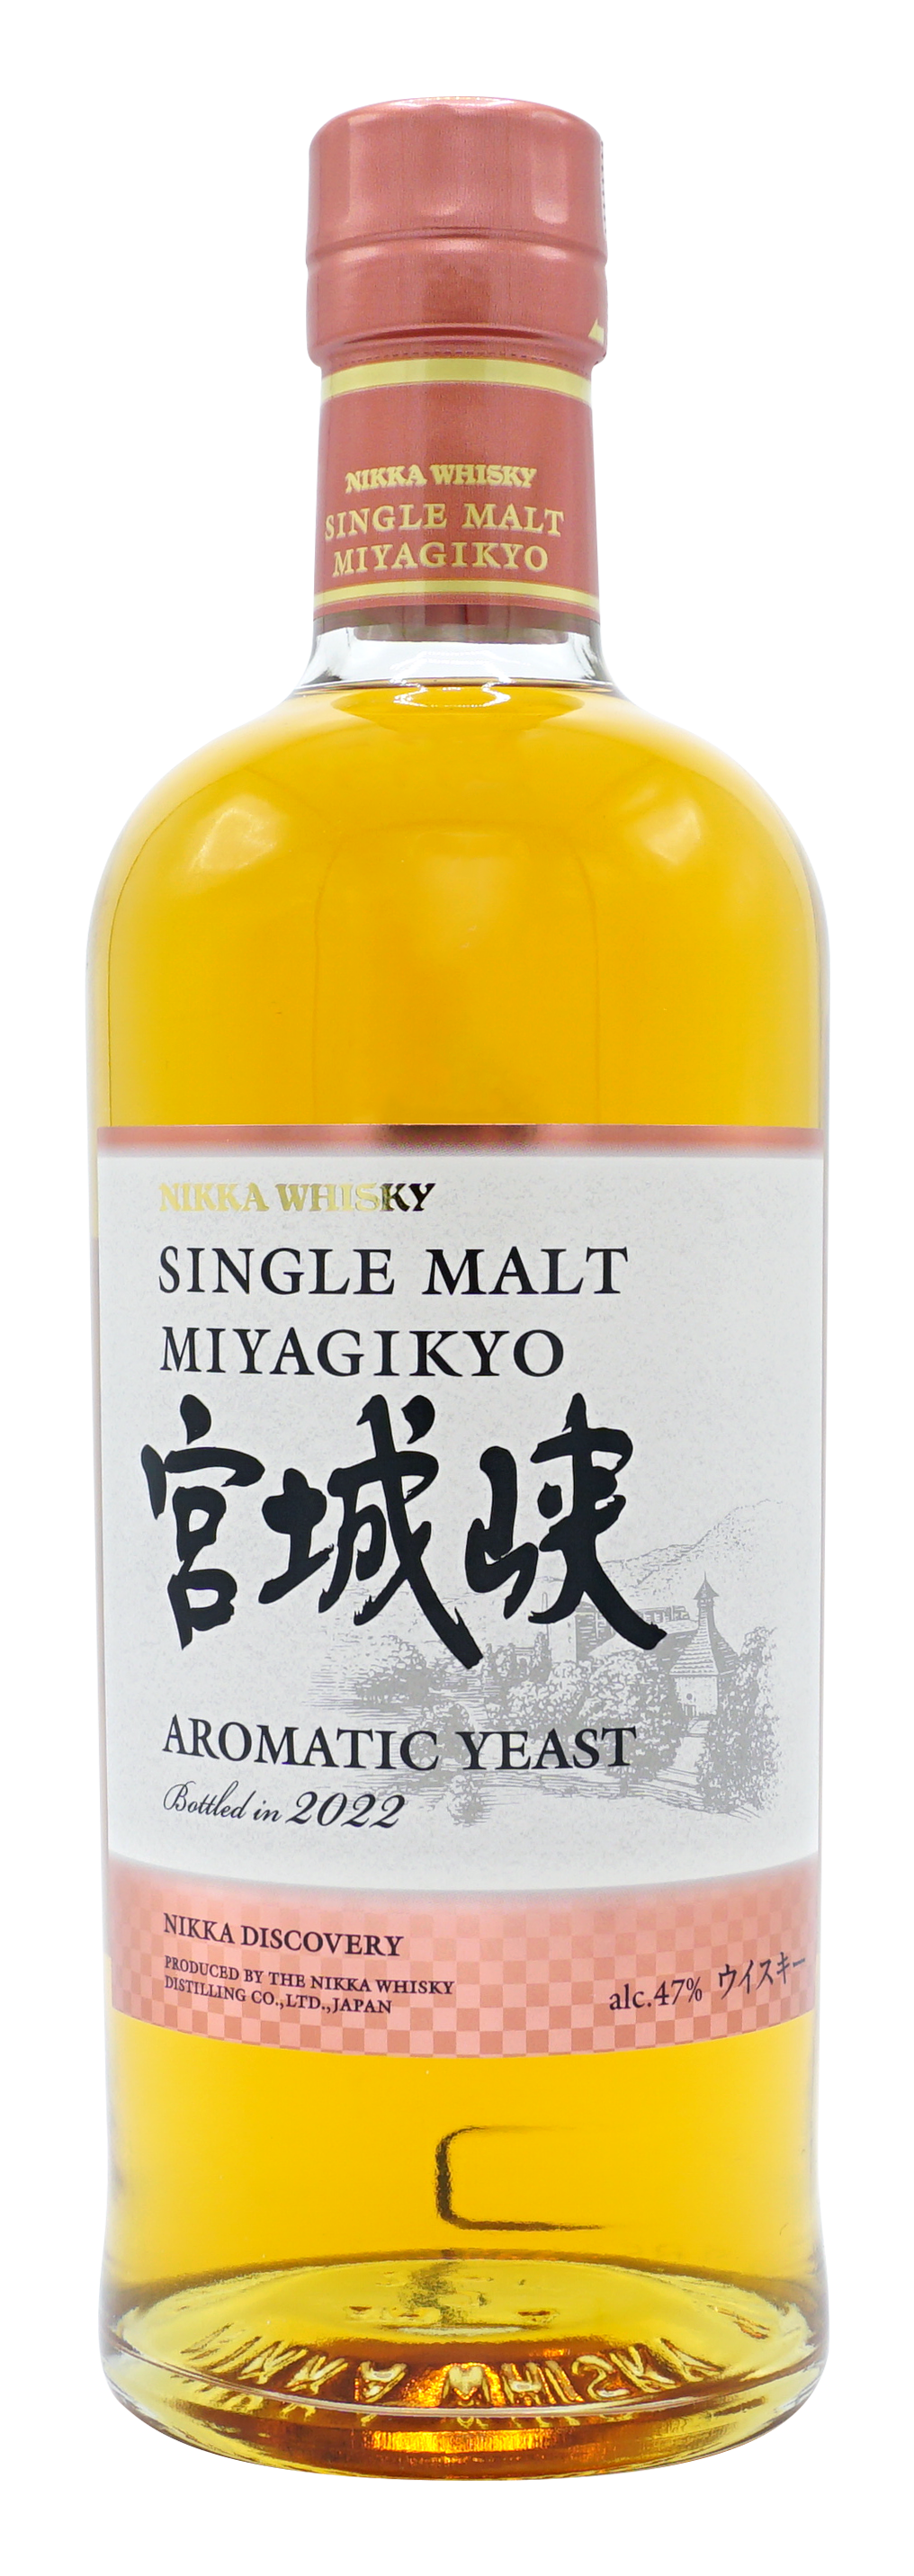 Miyagikyo Discovery Aromatic Yeast Single Malt 70cl 47